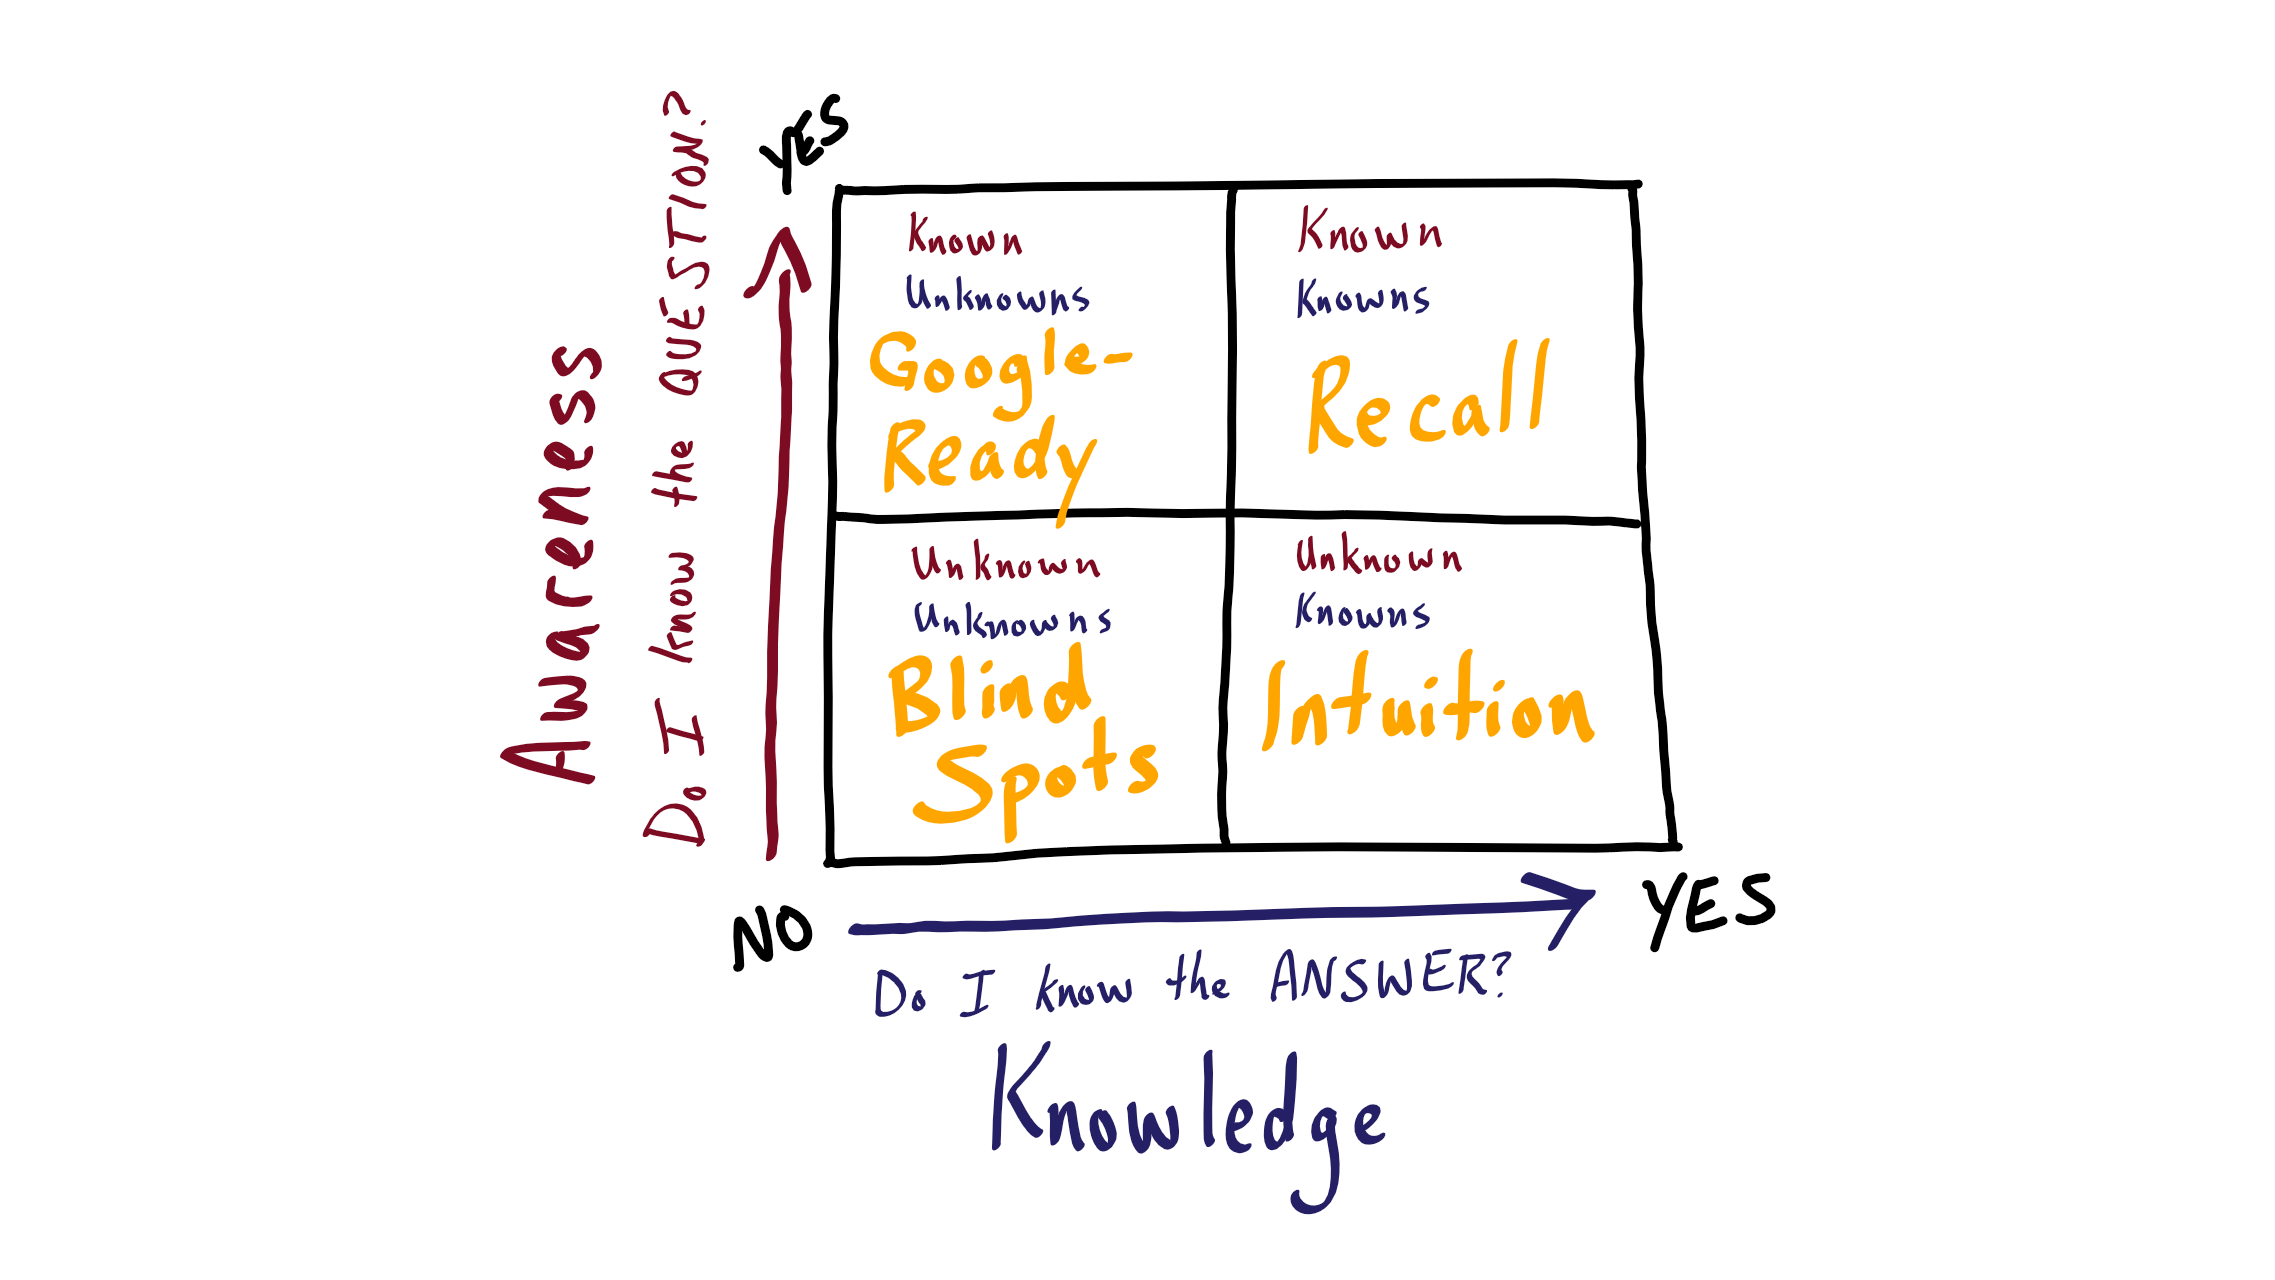 The Knowledge Square